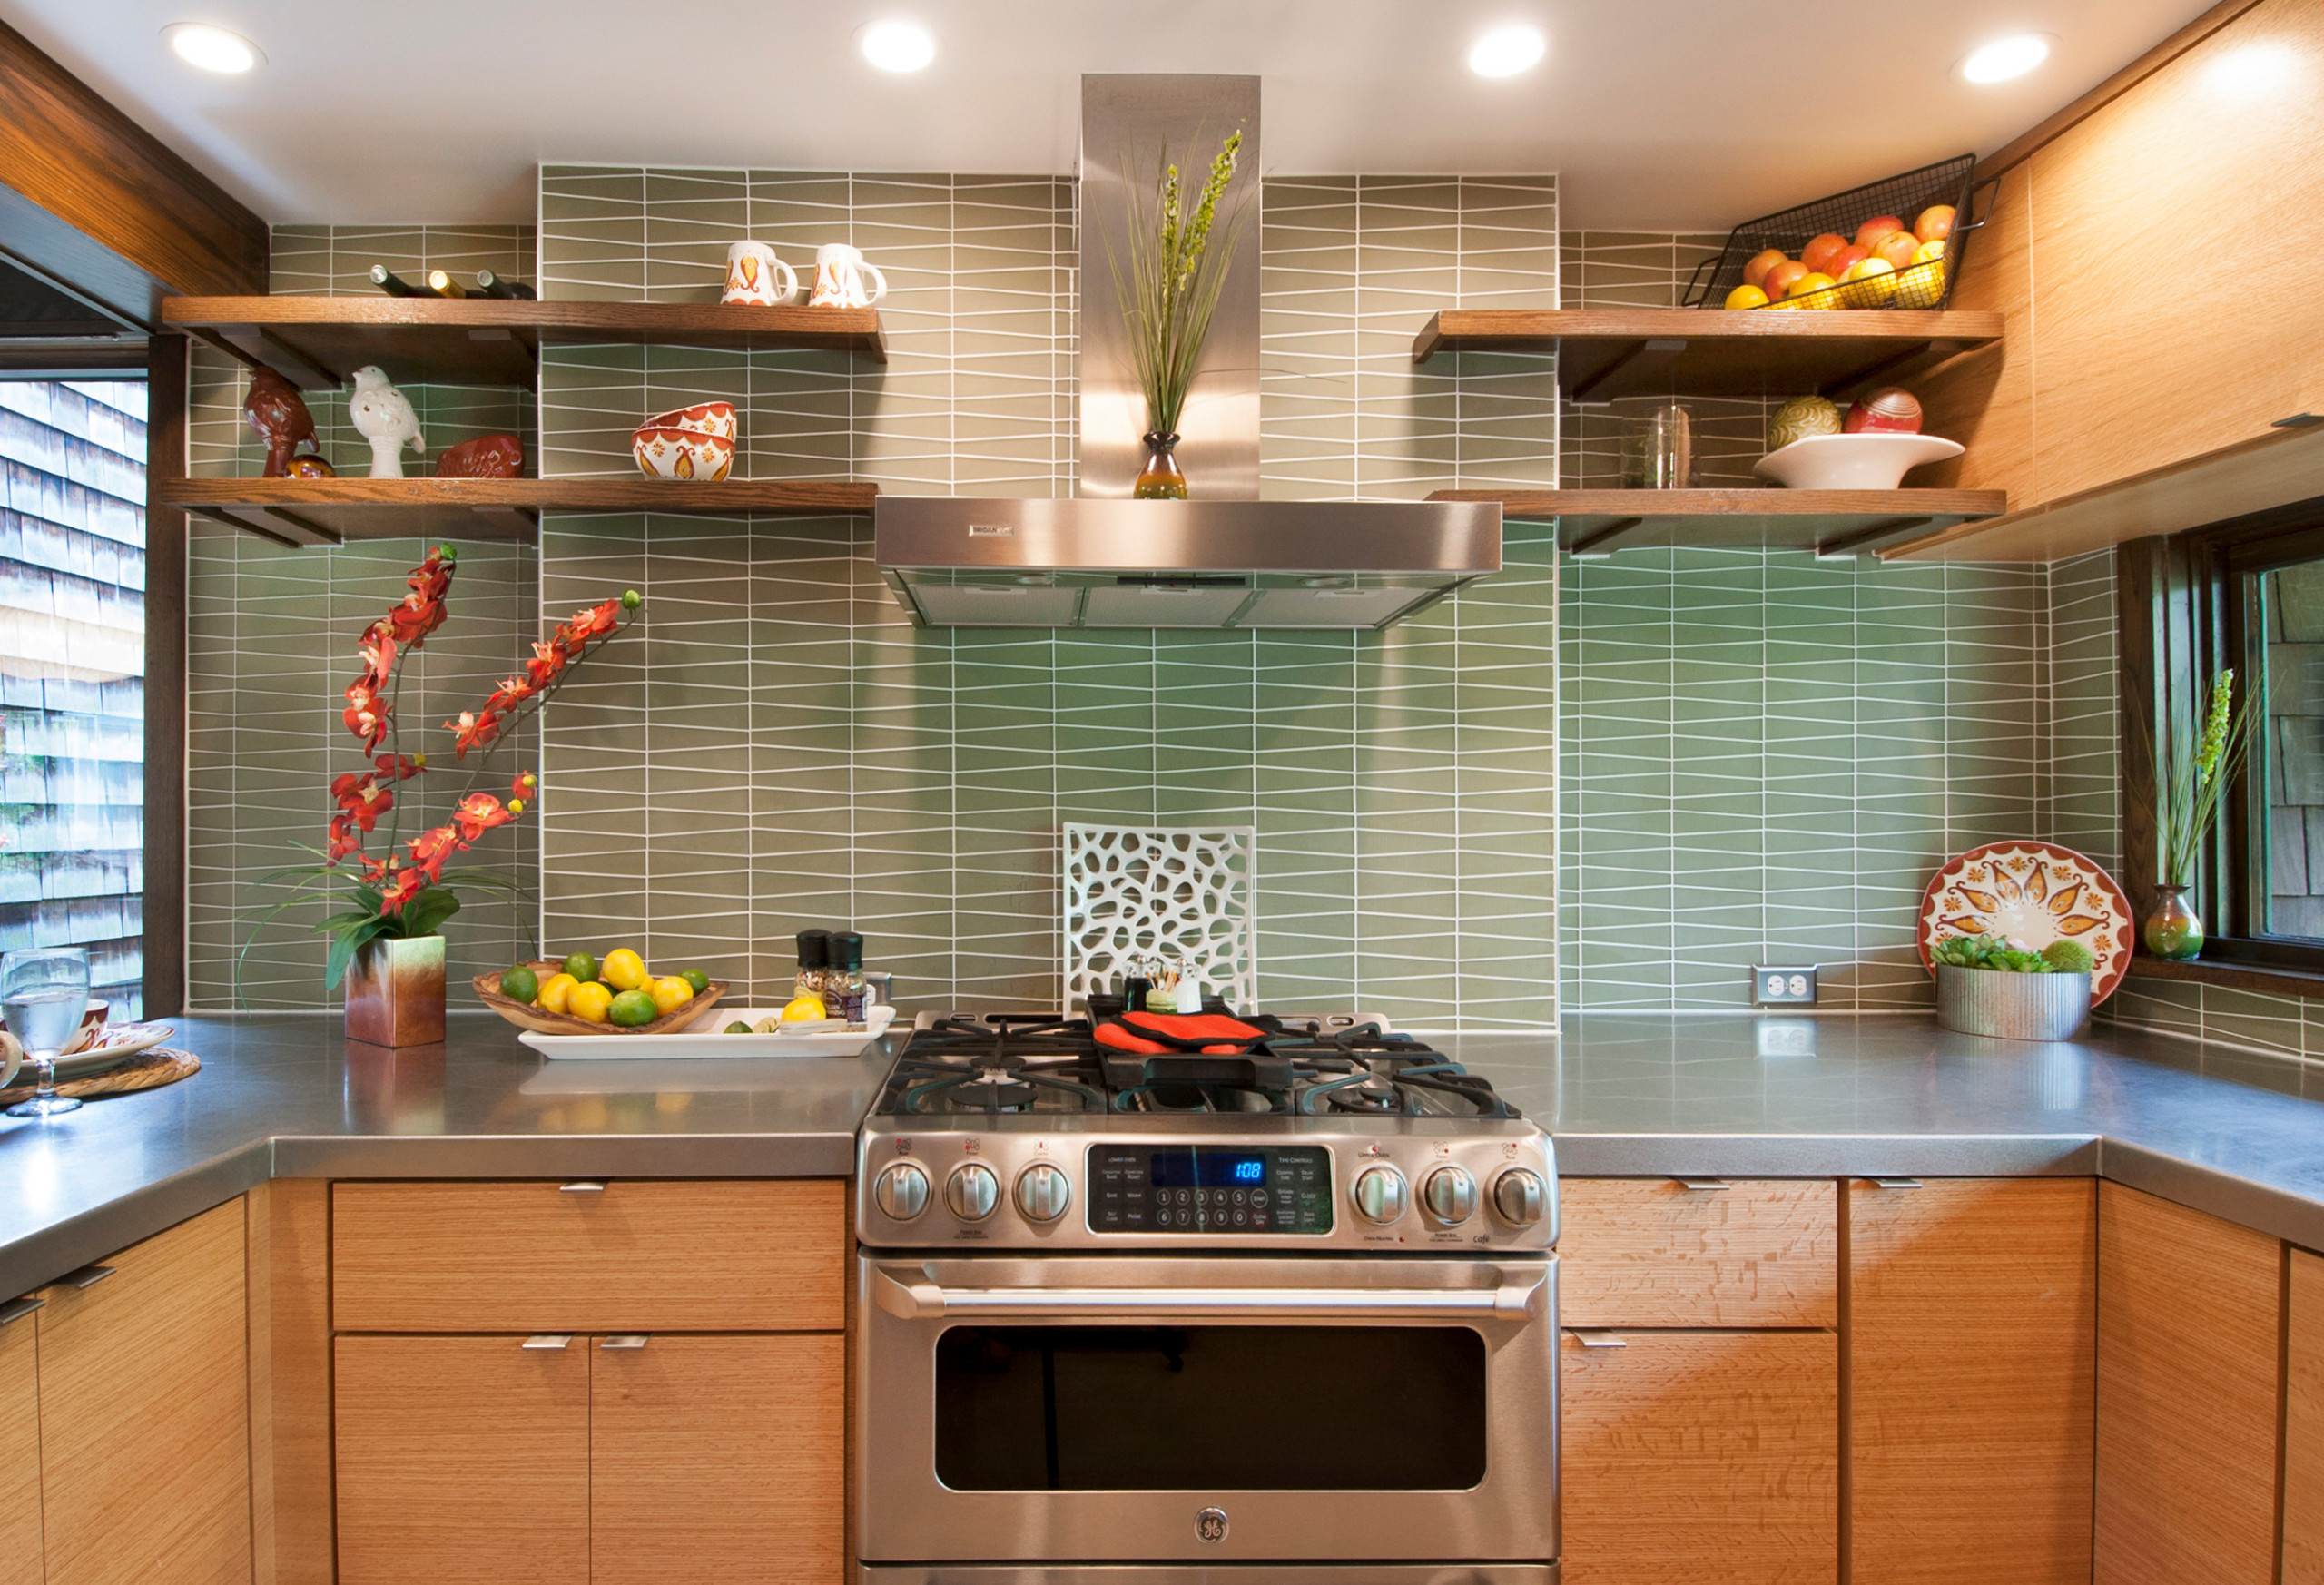 46 Beautiful Kitchen Backsplash Ideas for Every Style and Budget  Kitchen  backsplash designs, Glass backsplash kitchen, Modern kitchen backsplash